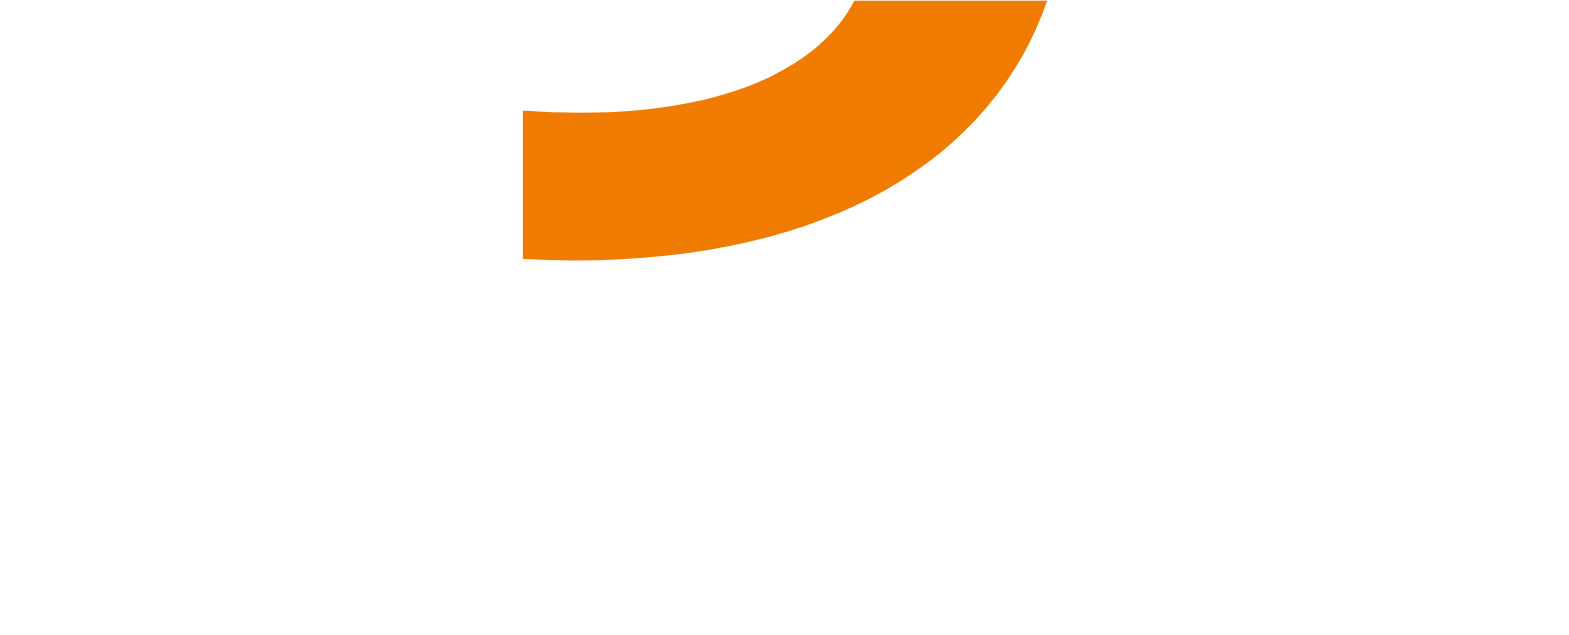 Sixt logo for dark backgrounds (transparent PNG)